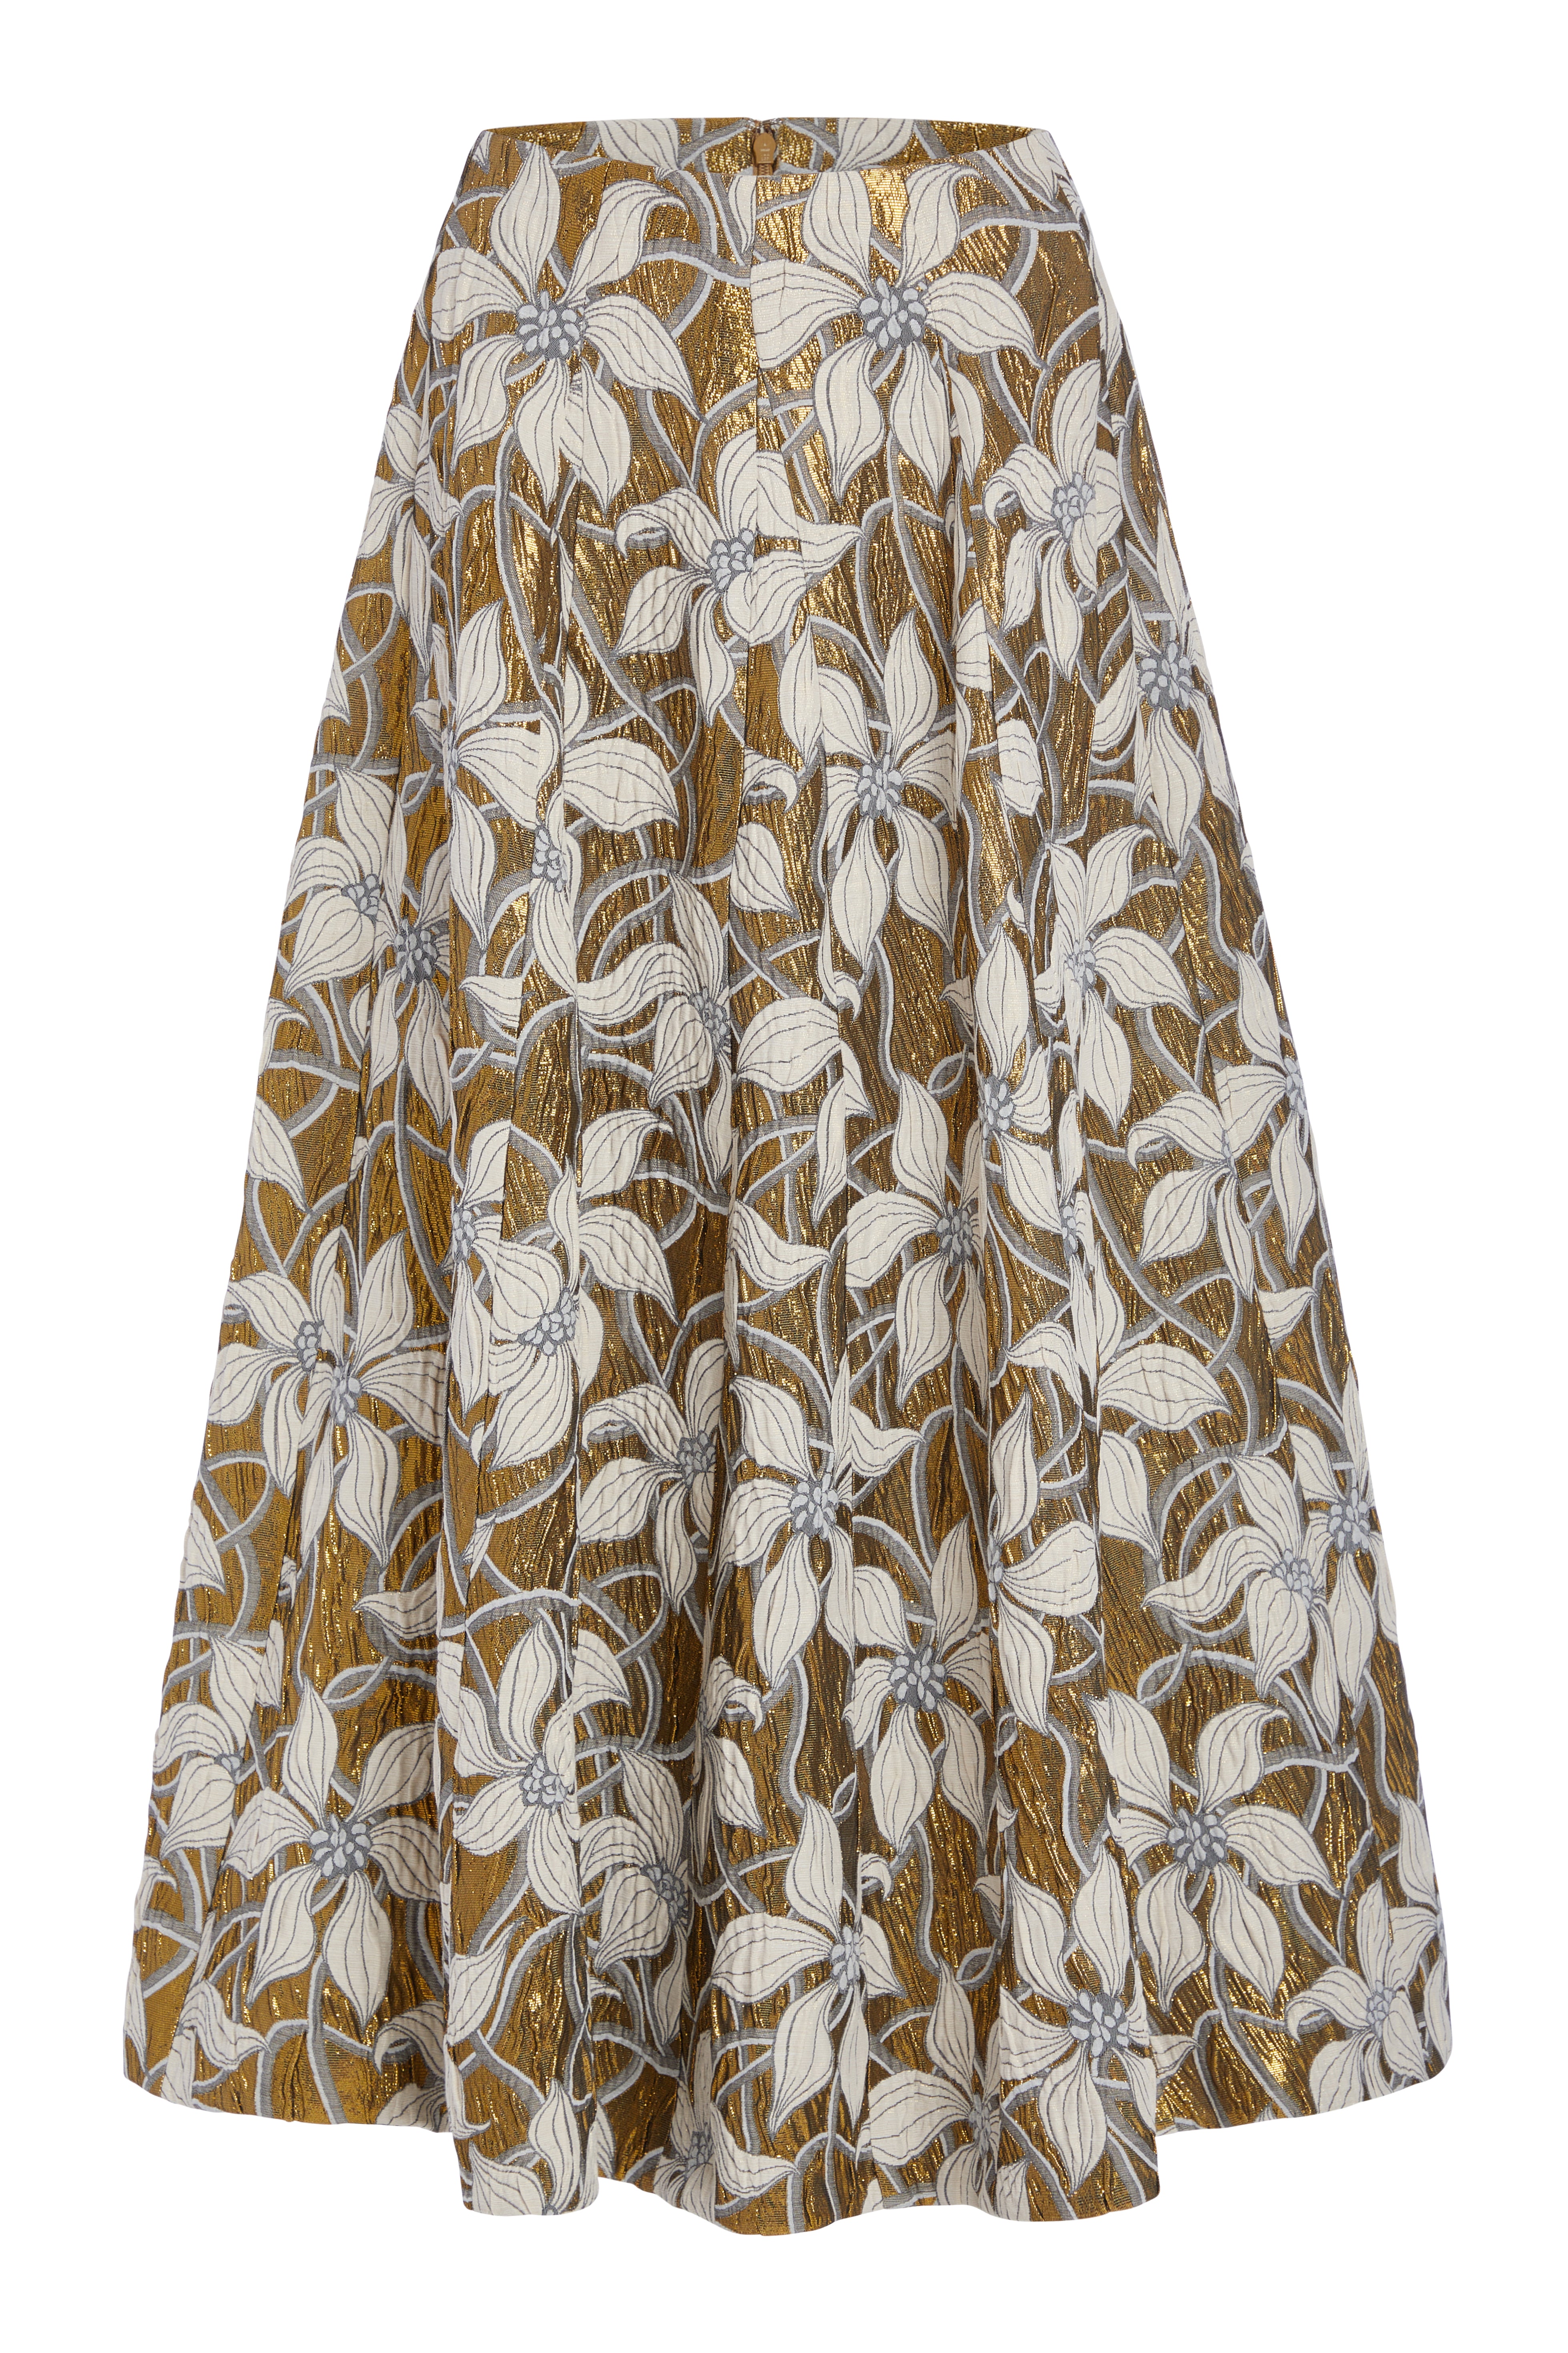 Marjorie Gold Floral Brocade Skirt